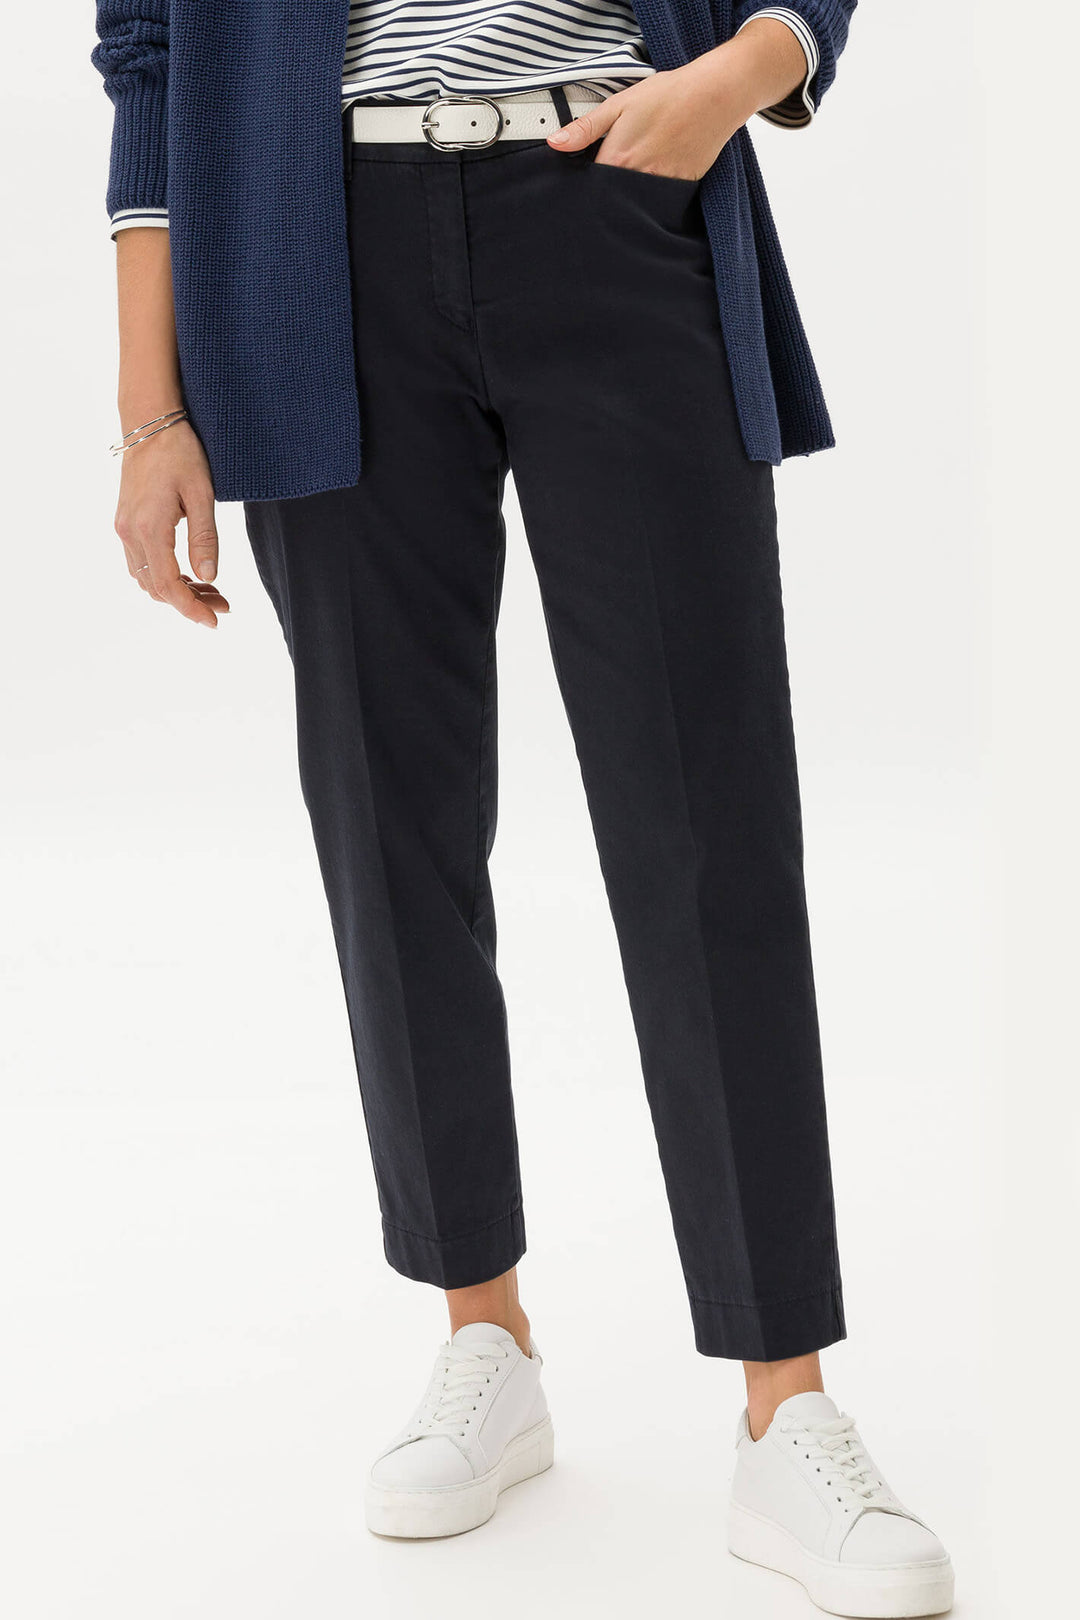 Brax Mara S 72-1458-21 Perma Blue Trousers - Olivia Grace Fashion